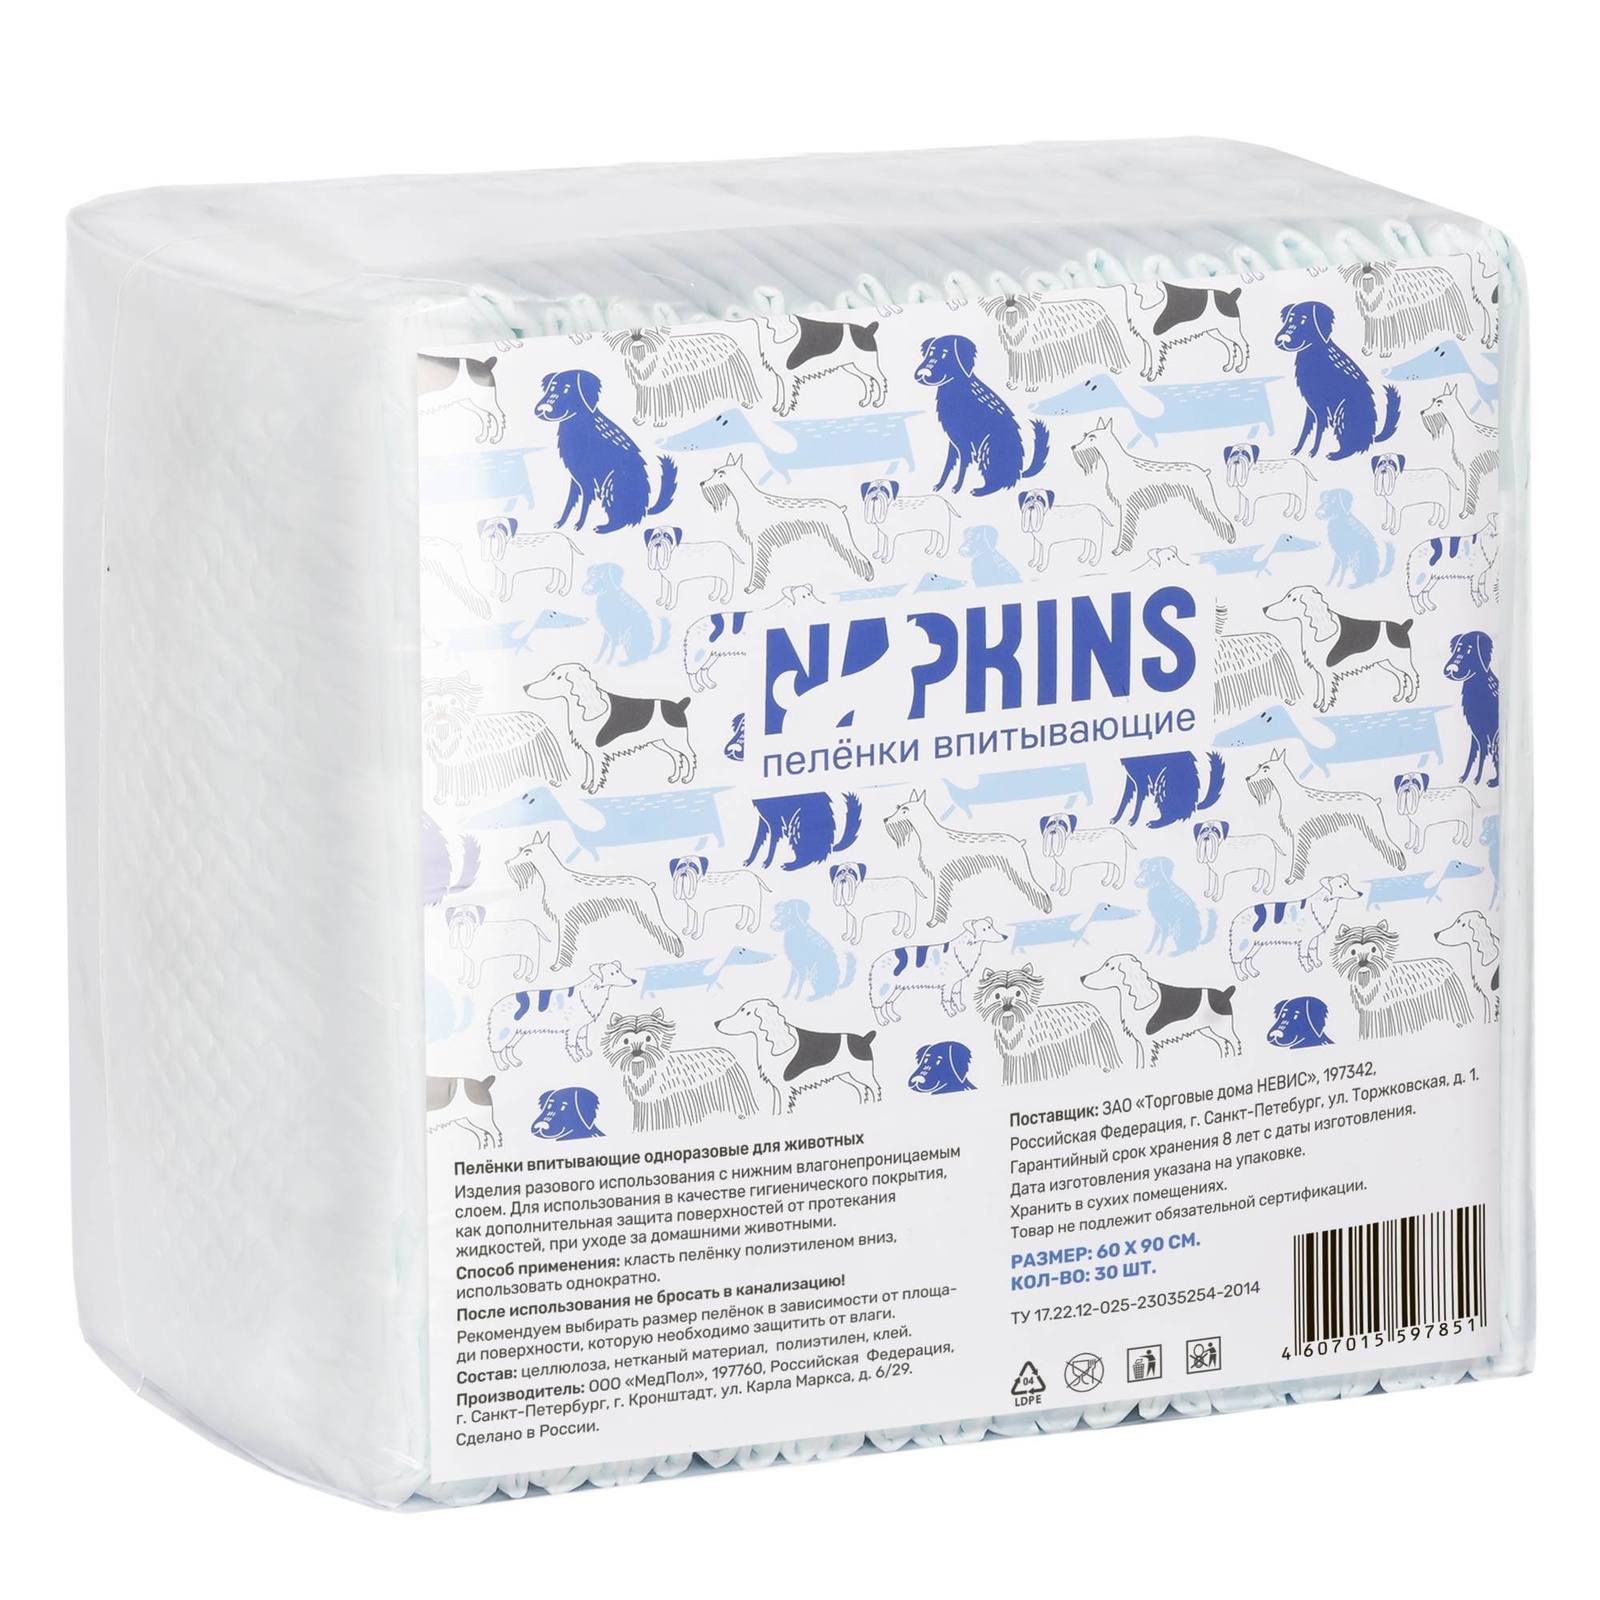 NAPKINS NAPKINS впитывающие пелёнки с целлюлозой для собак 60х90 (100 г) napkins napkins впитывающие пелёнки с целлюлозой классические 60х40 10 шт